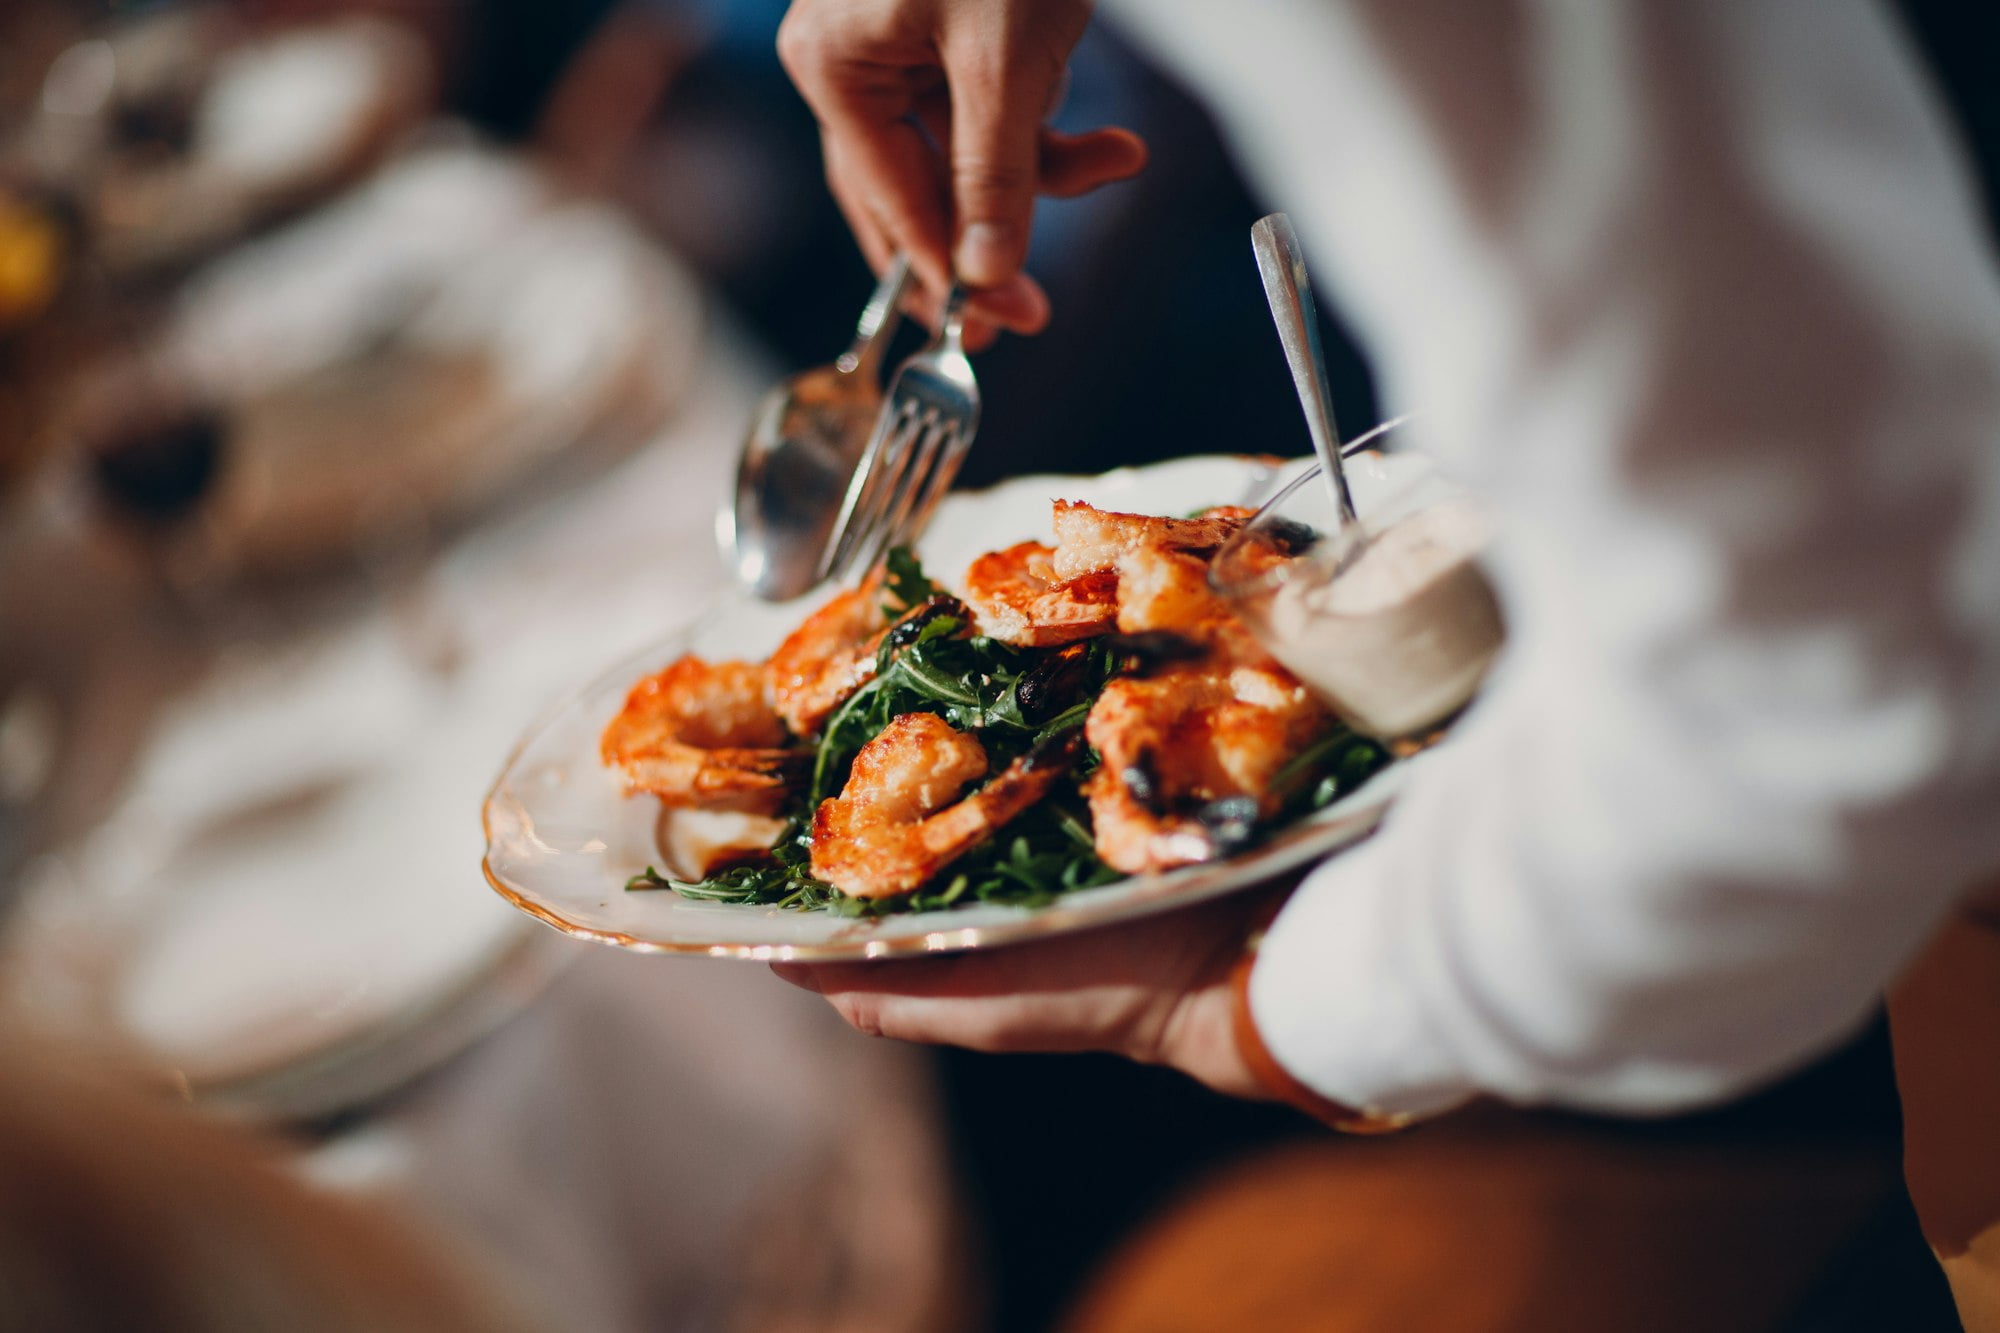 Waiter serves shrimp with arugula.